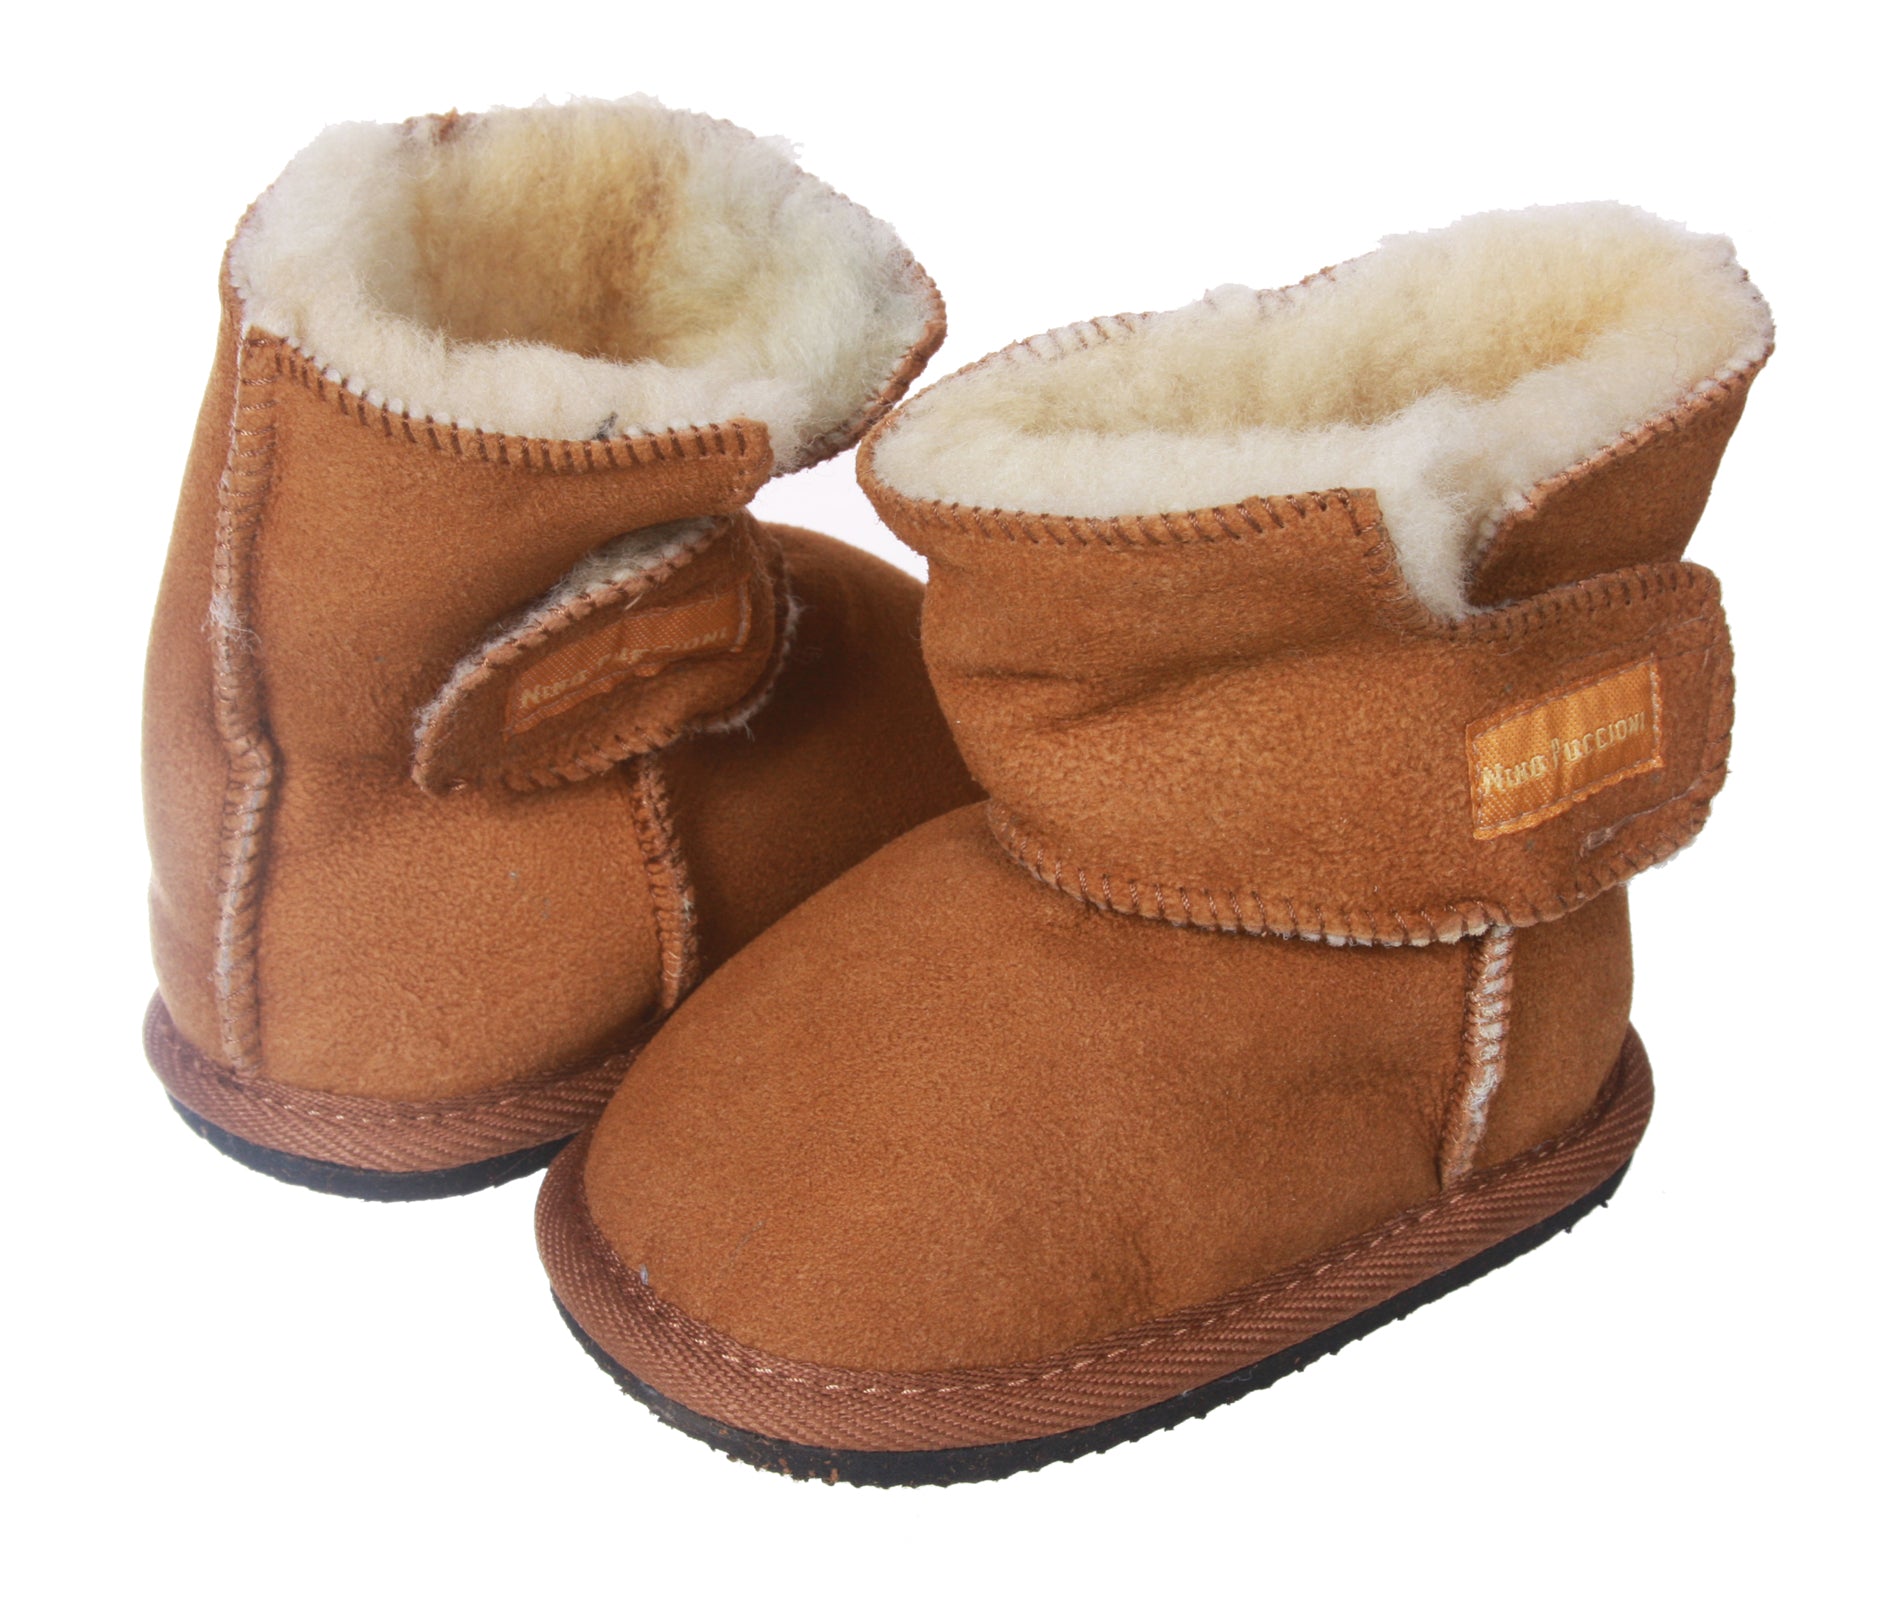 NINO Infants' Genuine Suede Shearling EVA outsole Boots